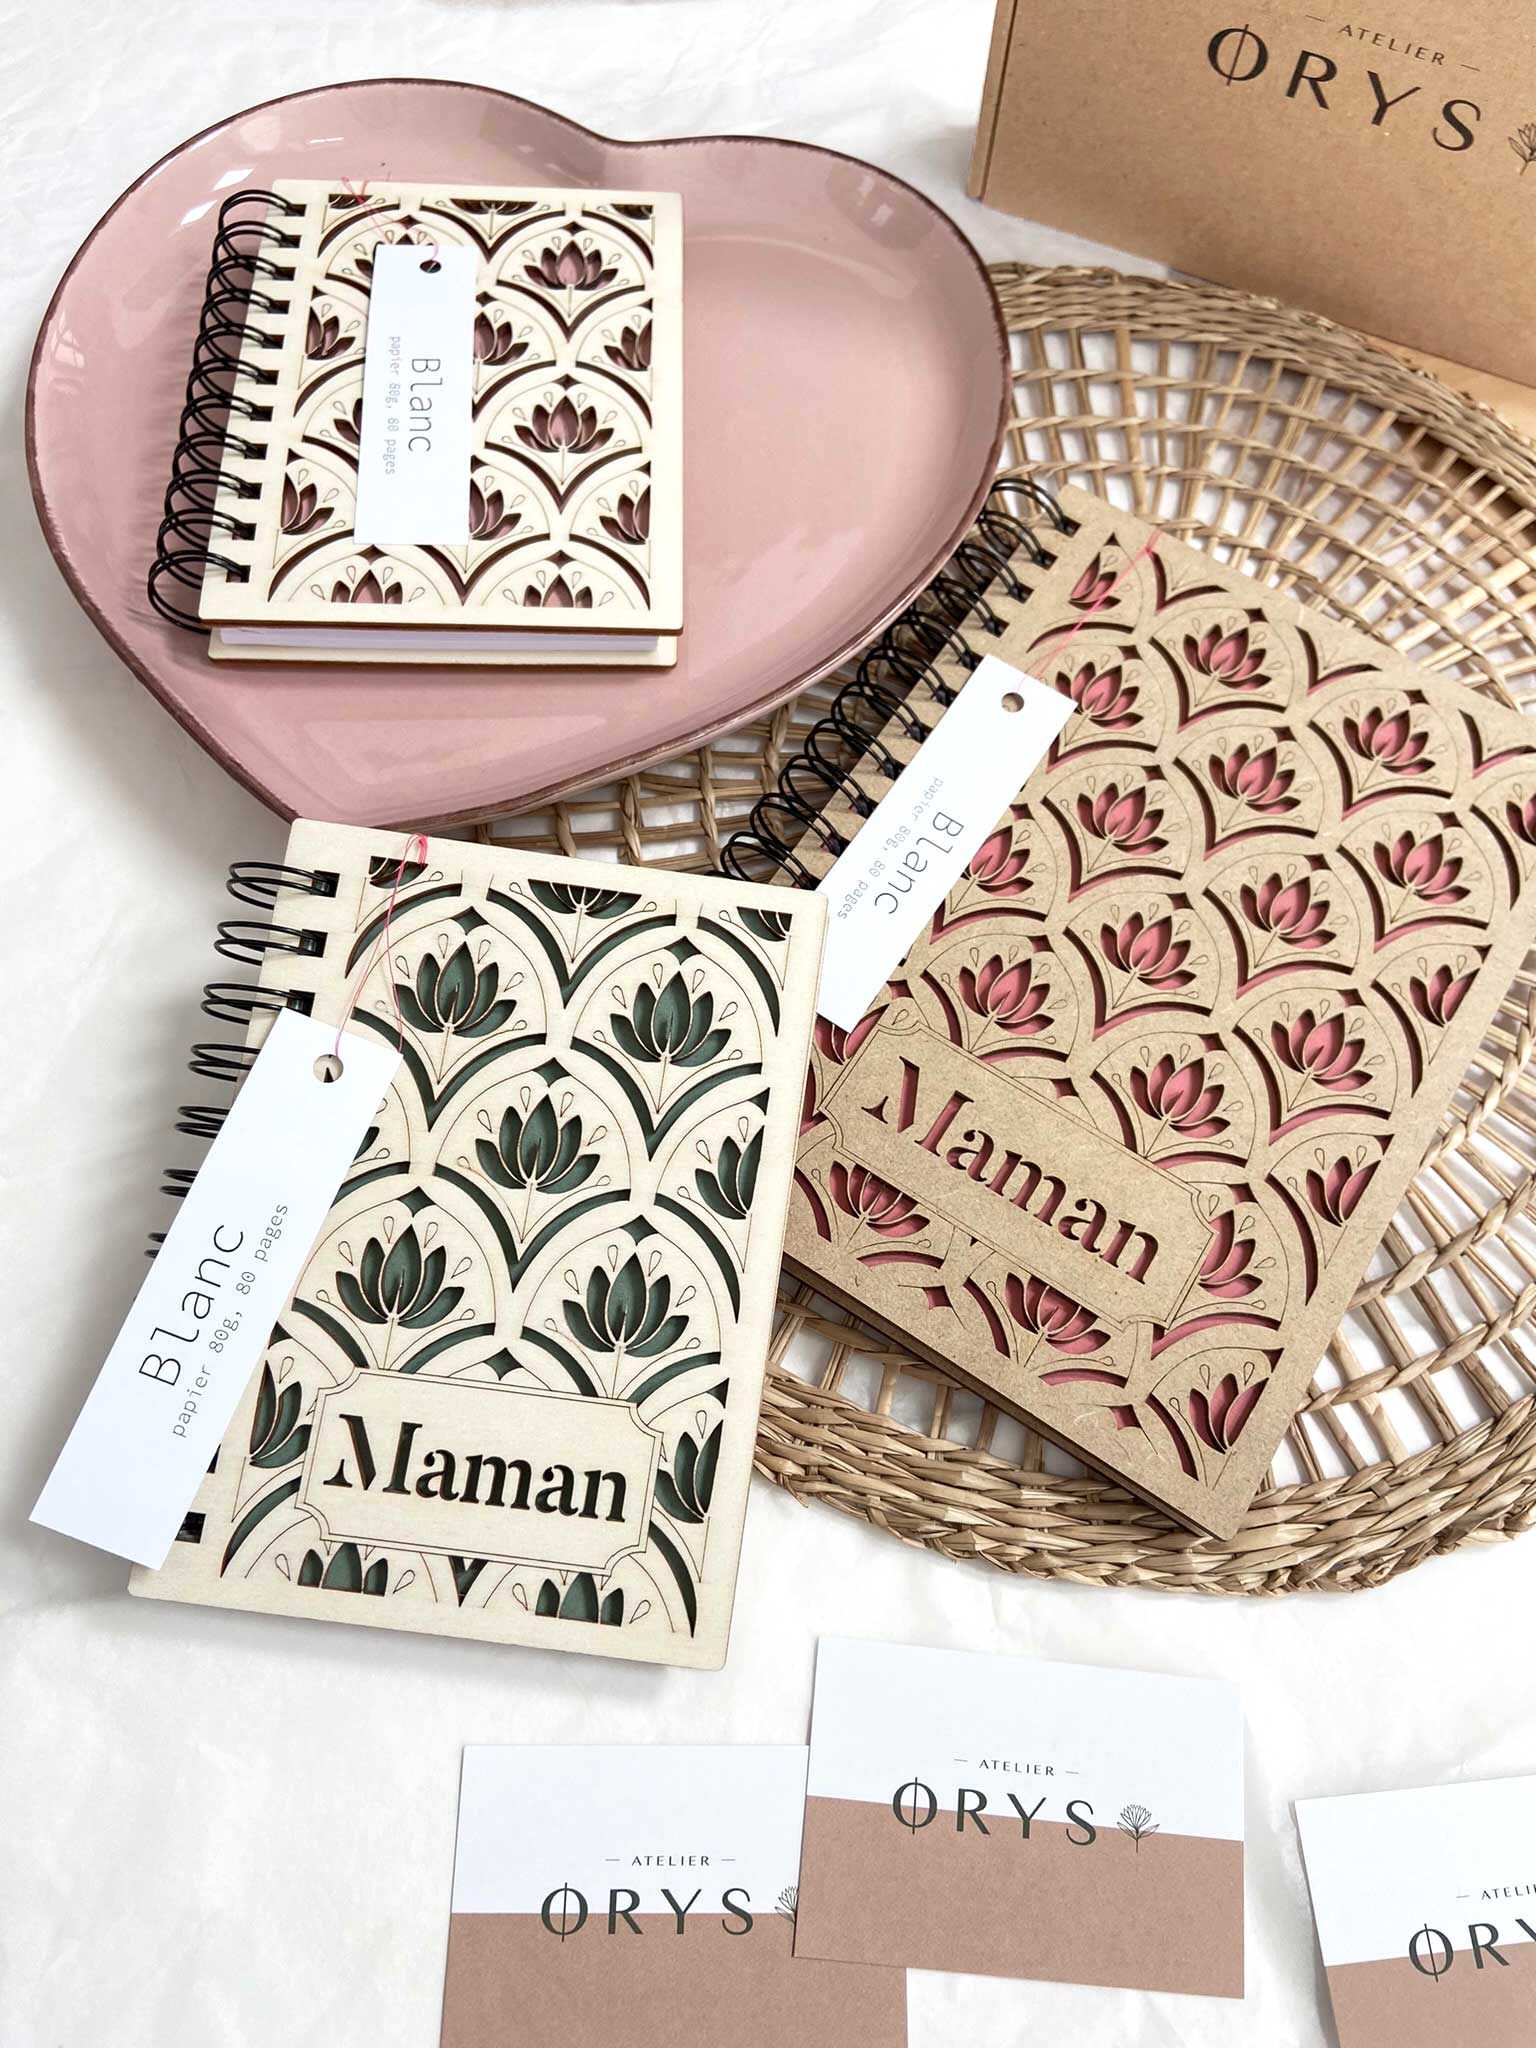 Moyen carnet en bois, personnalisation "Maman" - Atelier ORYS